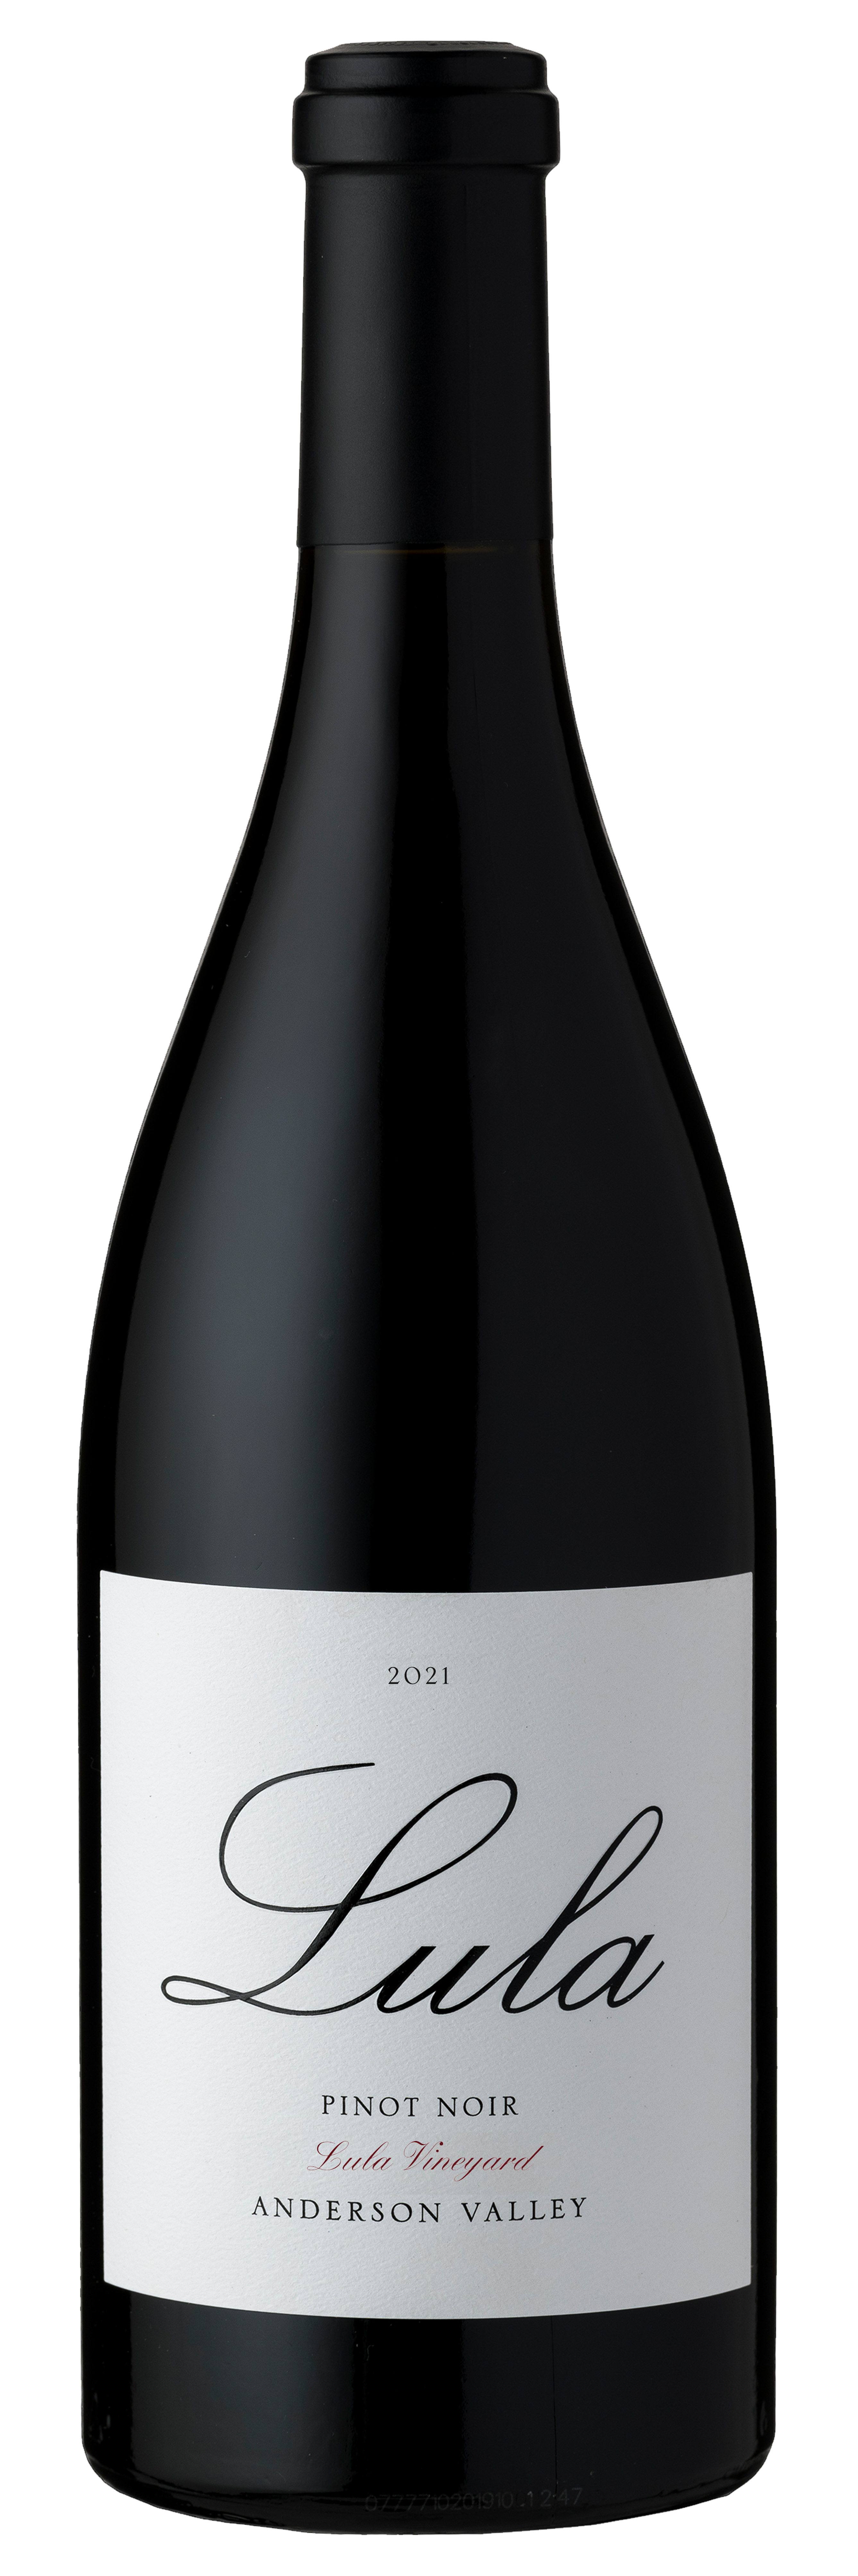 Product Image for 2021 Lula Vineyard Pinot Noir